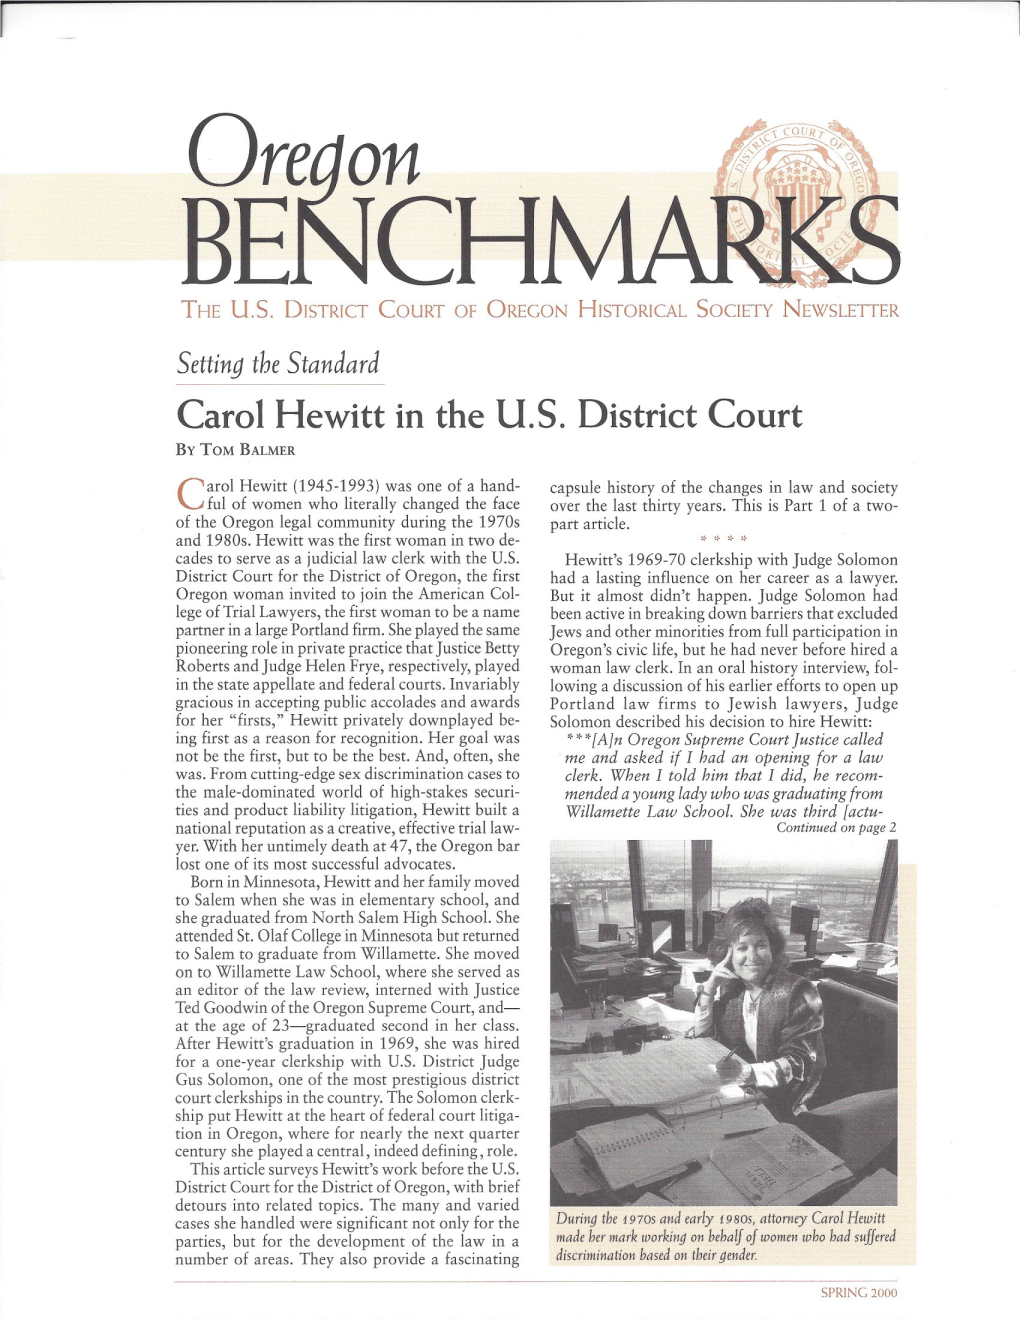 Carol Hewitt in the U.S. District Court by TOM BALMER